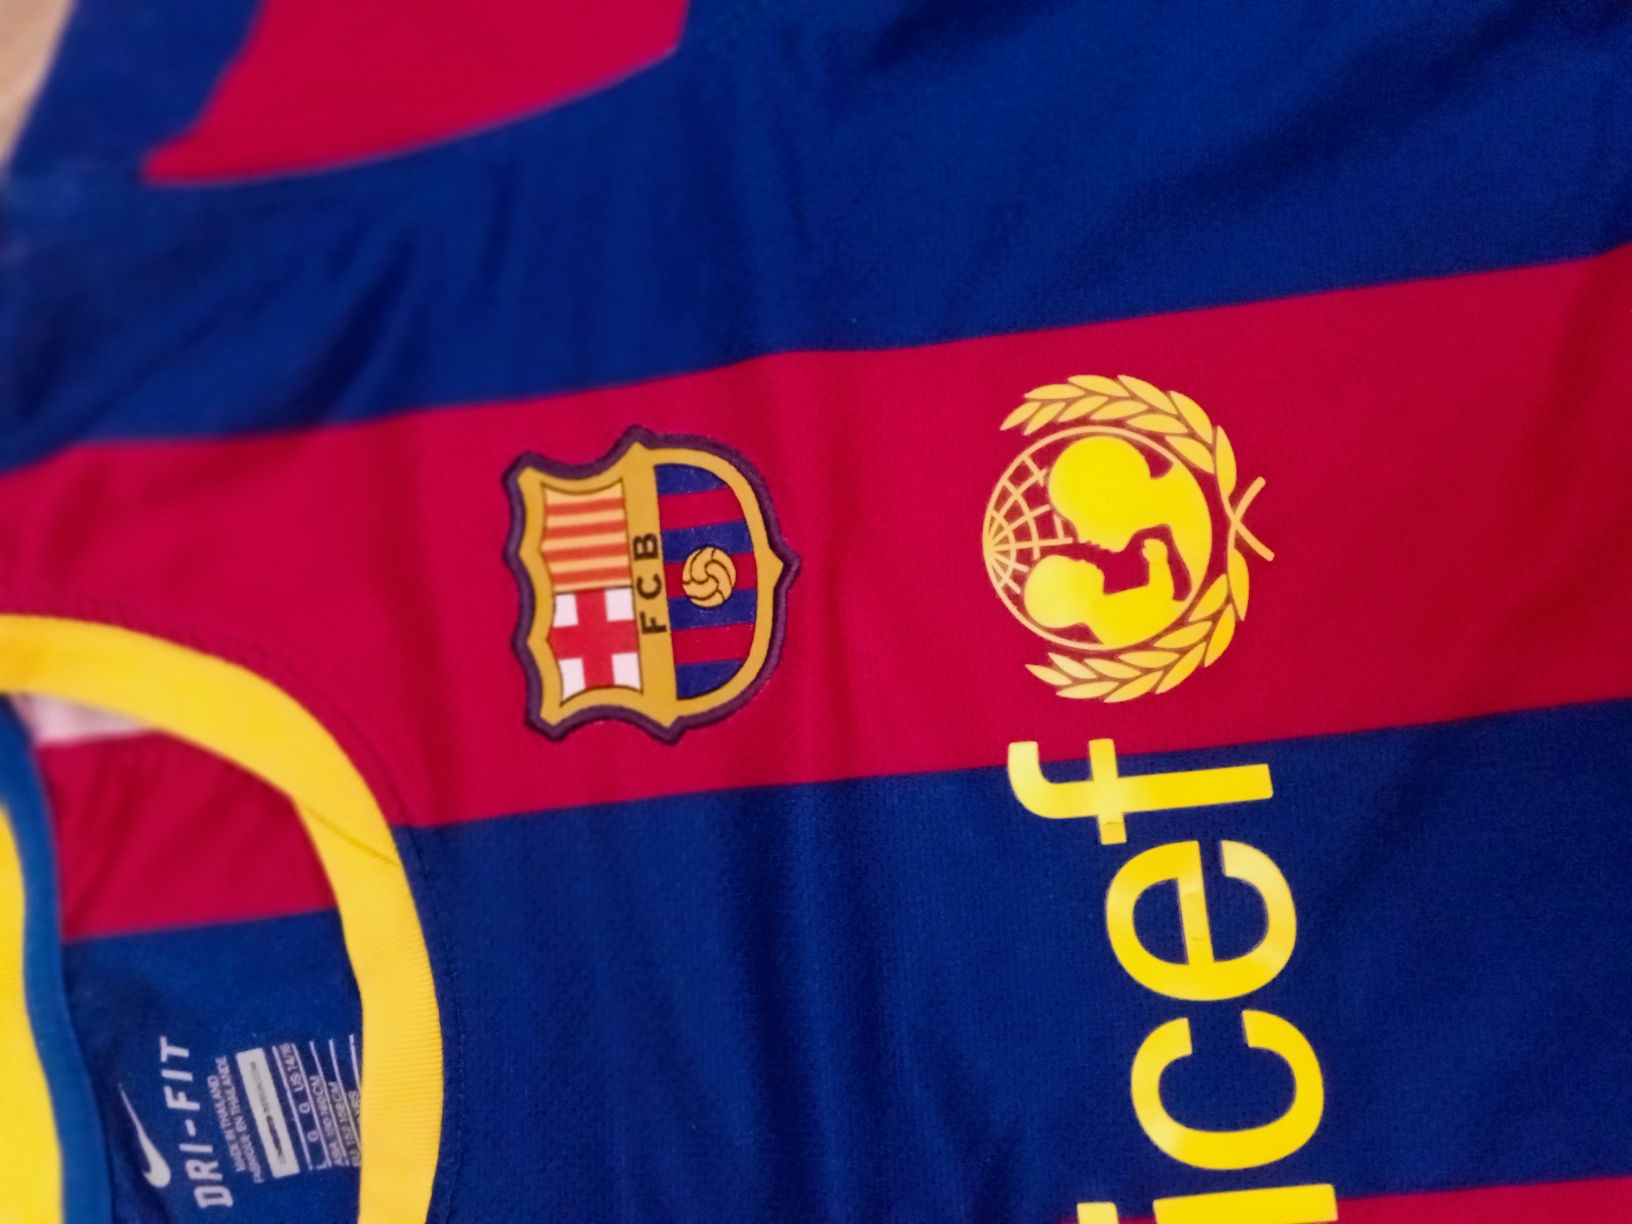 Domowa koszulka FC Barcelona Nike sezon 2010/11